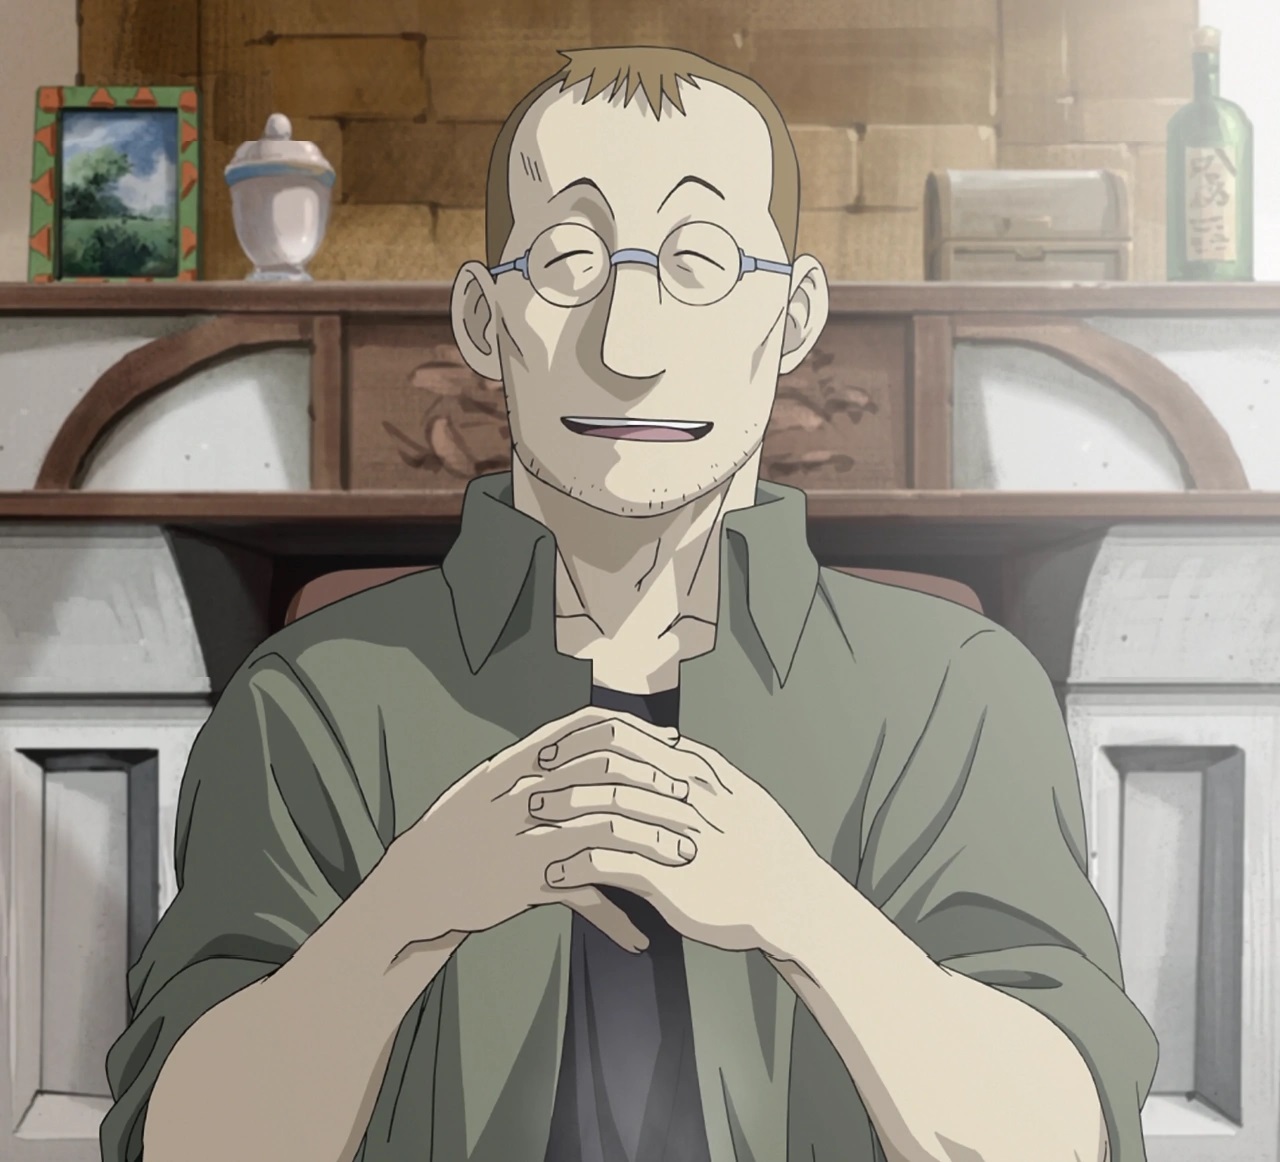 En la fotografía aparece el personaje Shou Tucker del anime FullMetal Alchemist